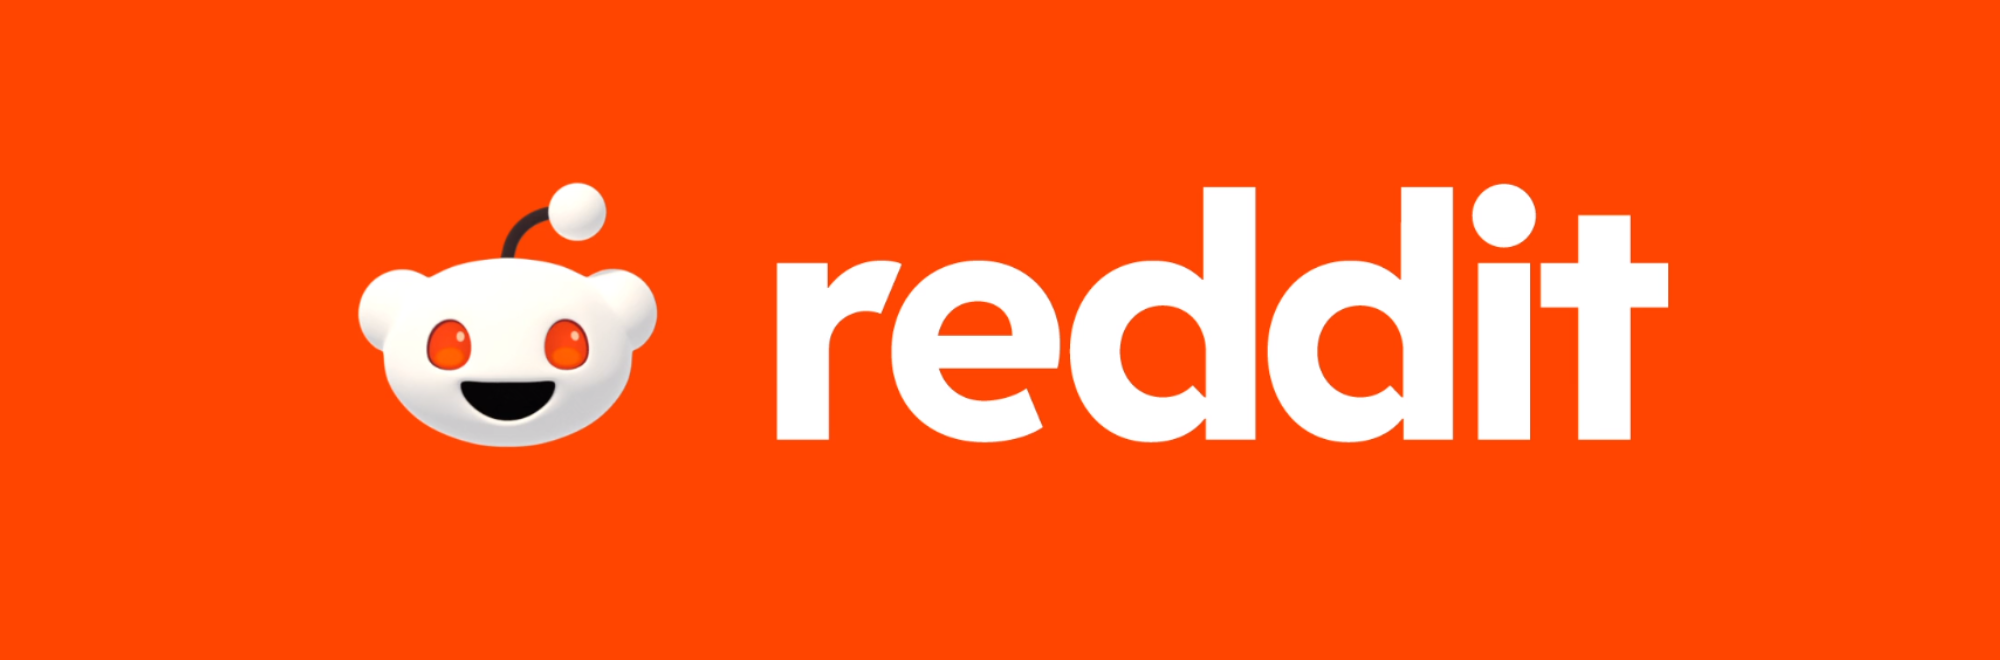 Pentagram puts Reddit's beloved mascot ‘Snoo’ at the heart of its brand refresh